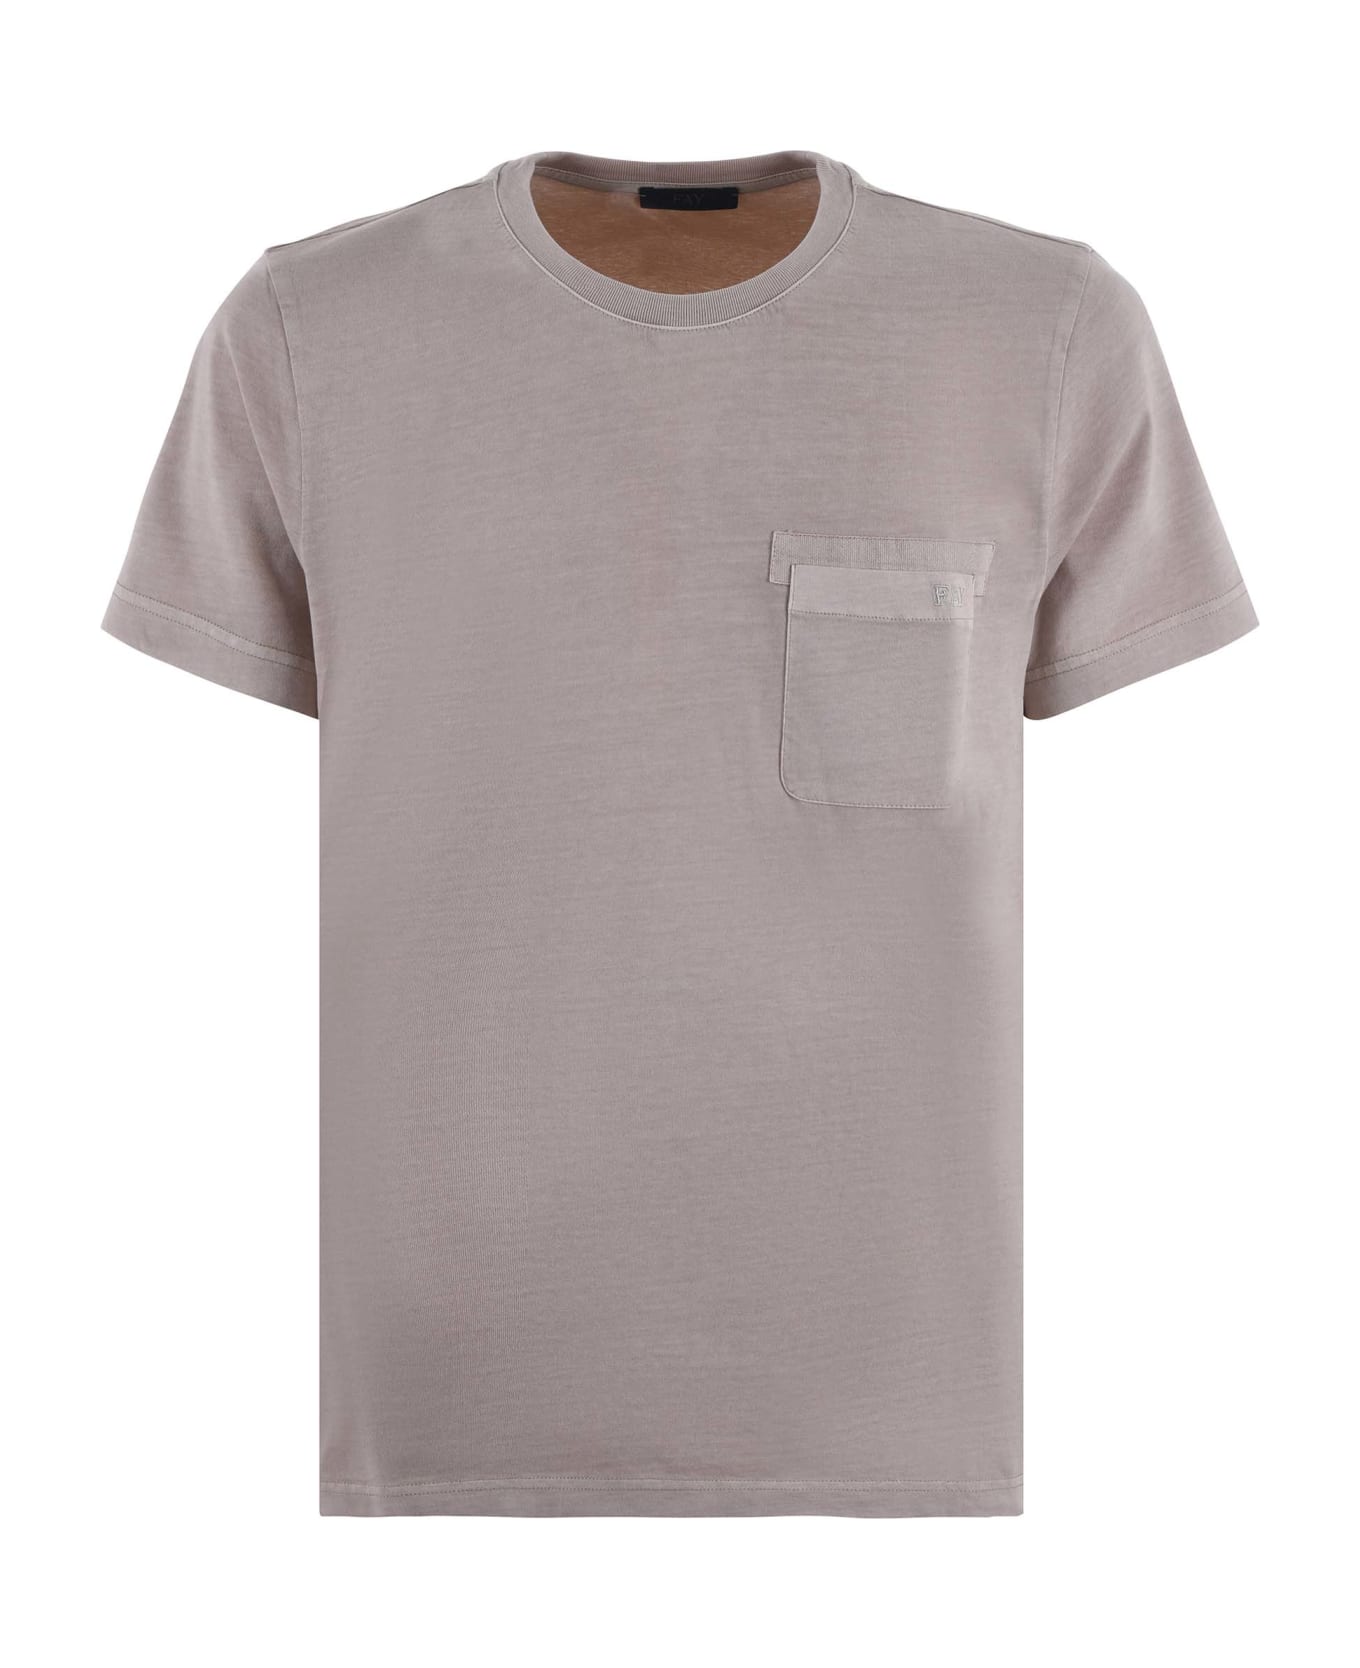 Fay T-shirt In Cotton - Beige シャツ